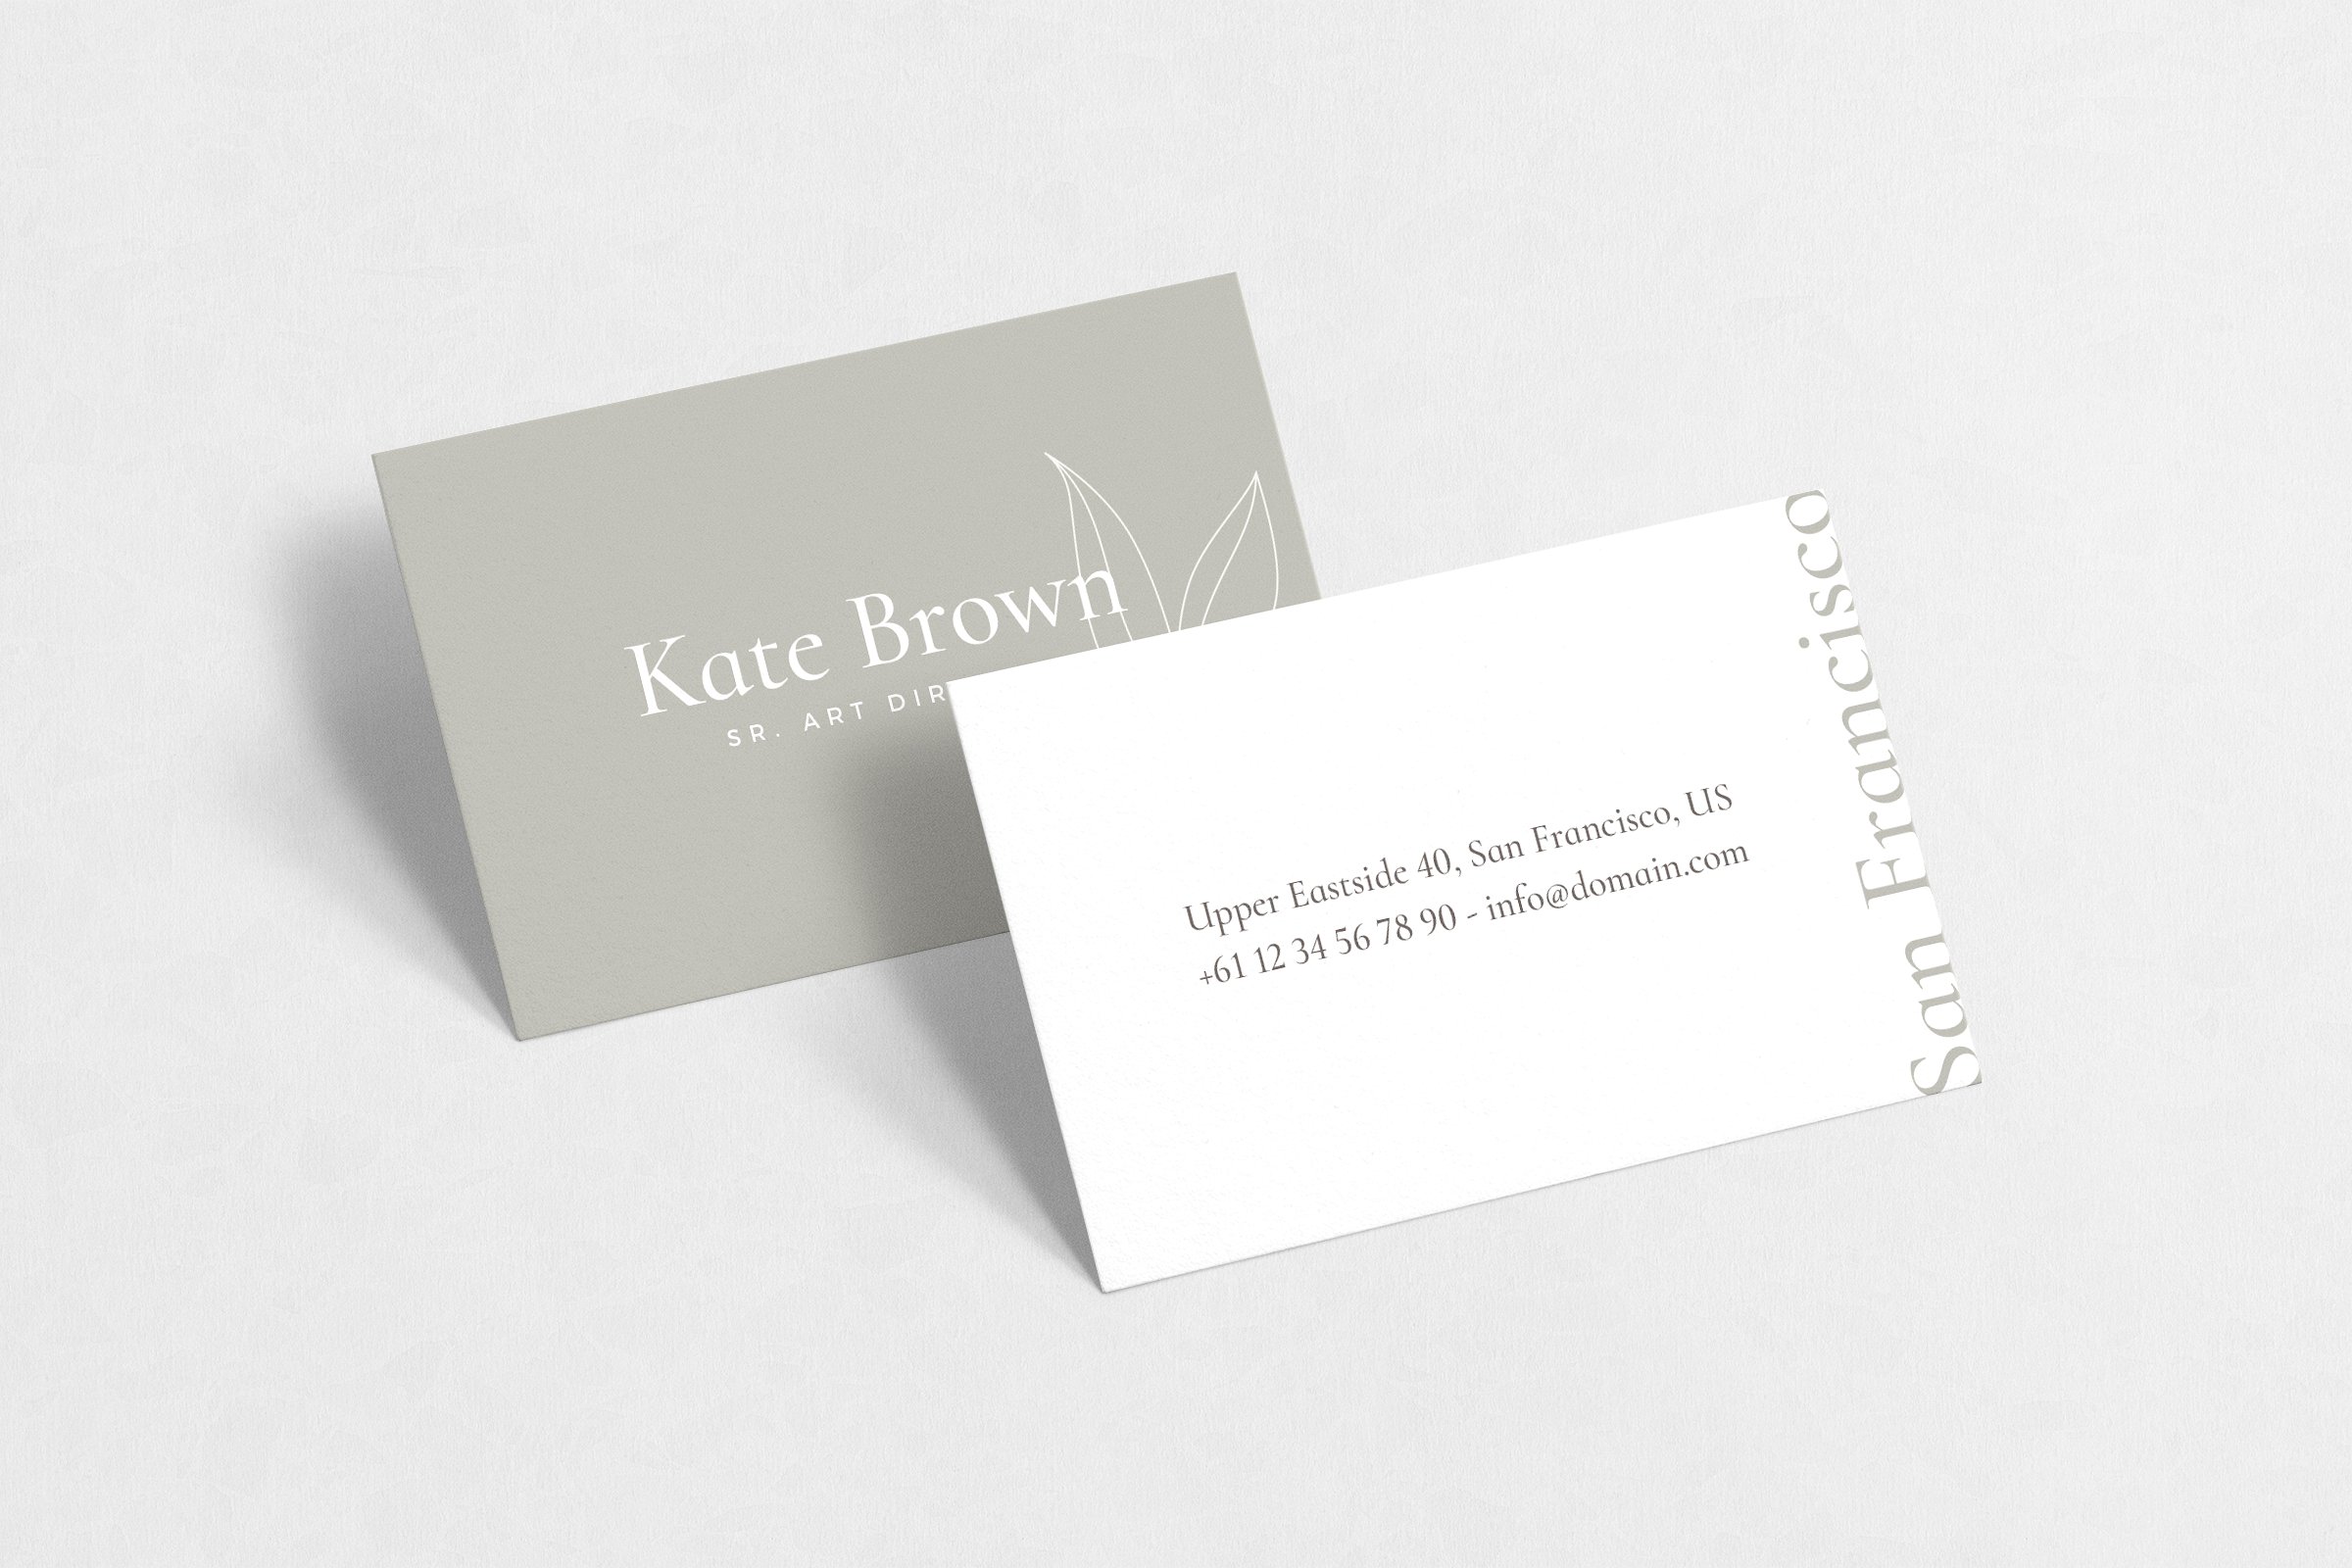 极简主义企业名片设计模板2 San Francisco Business Cards插图(3)